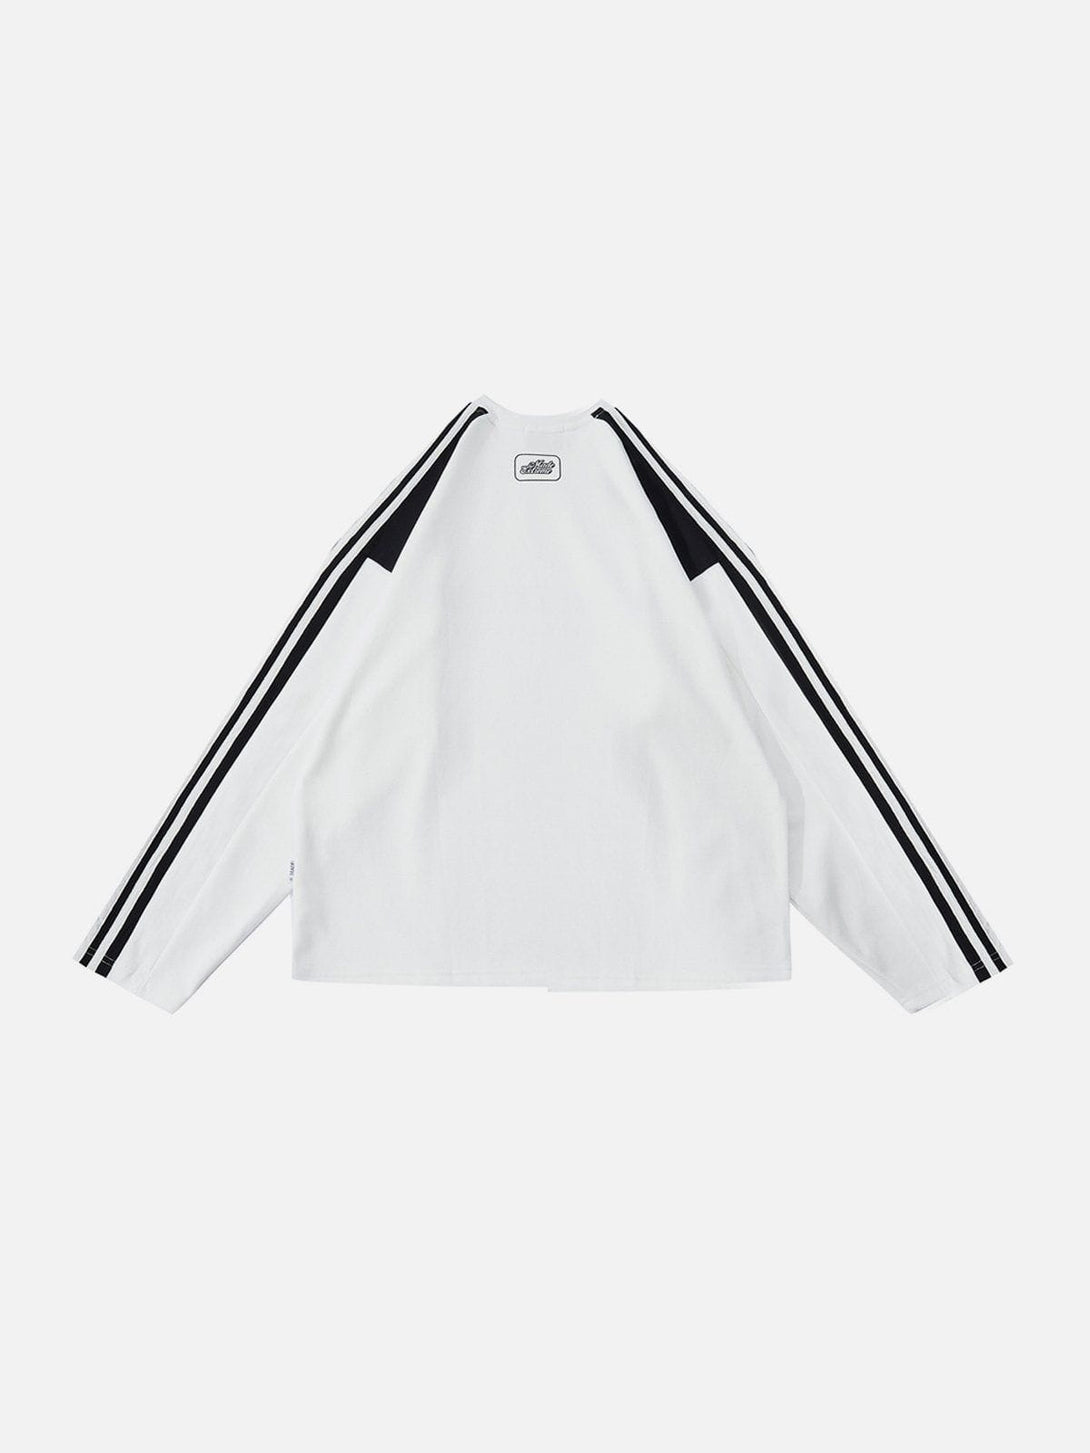 Majesda® - Contrast Stripes Sweatshirt outfit ideas streetwear fashion